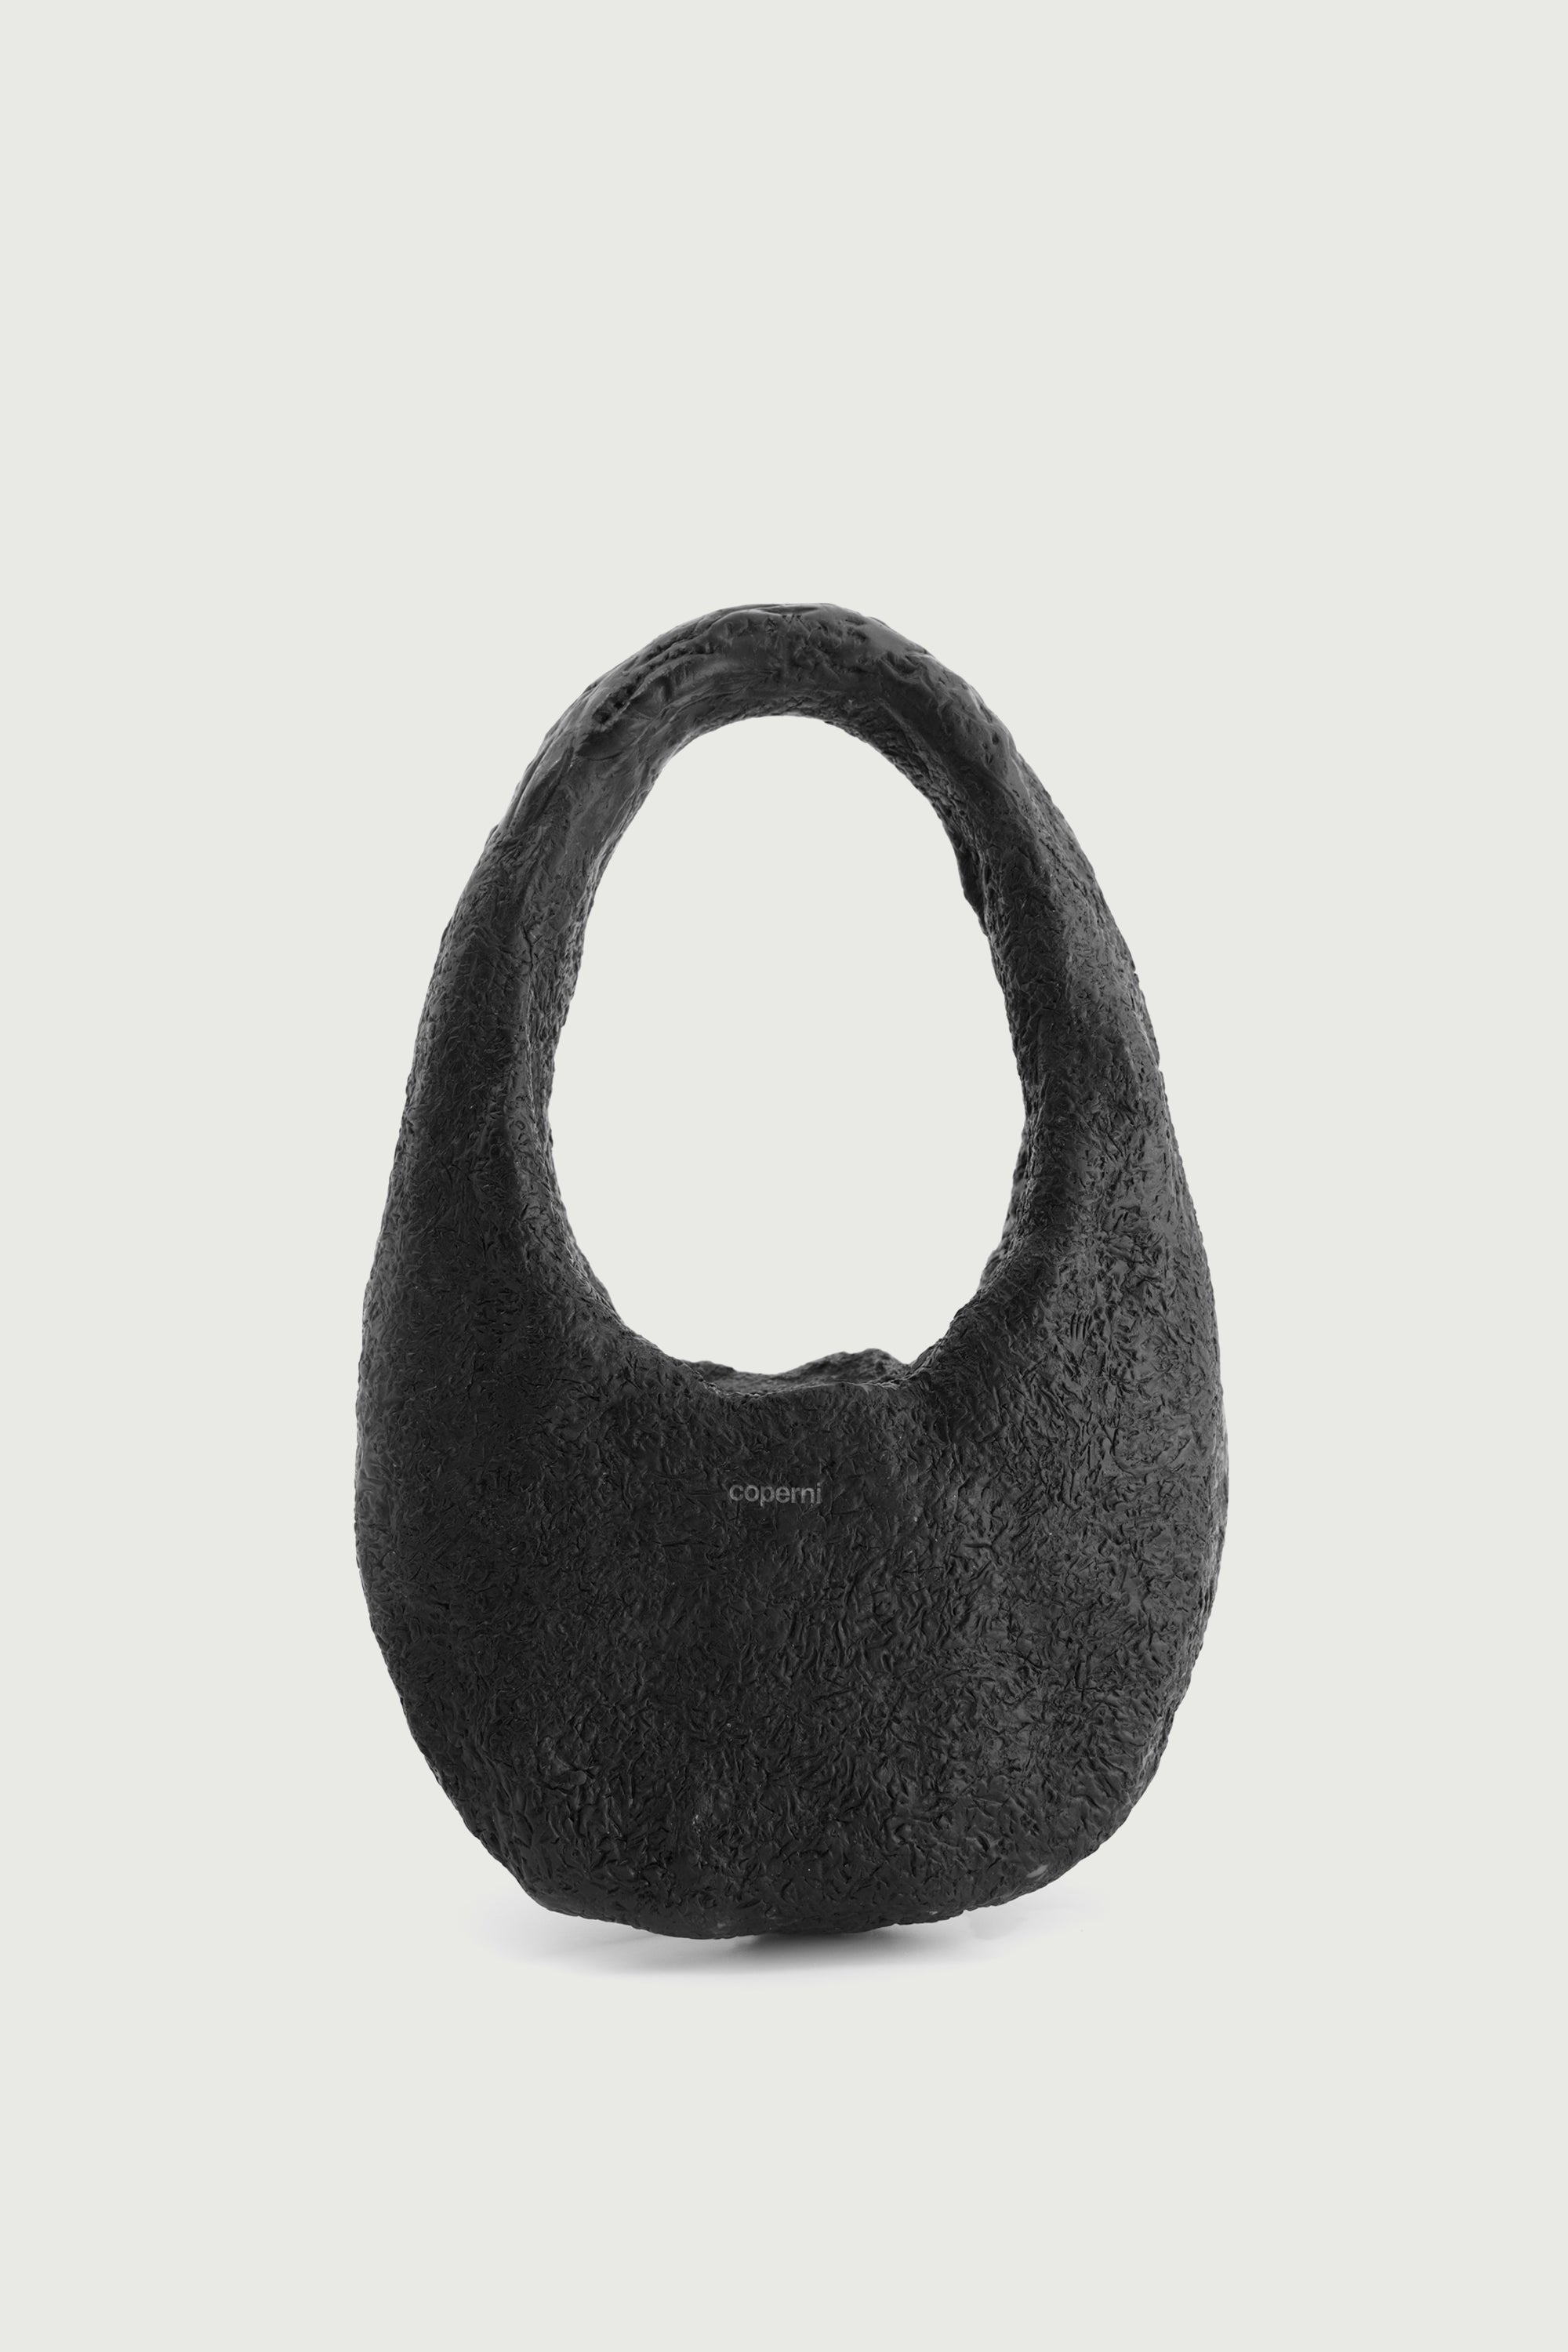 mini Swipe leather tote bag | Coperni | Eraldo.com